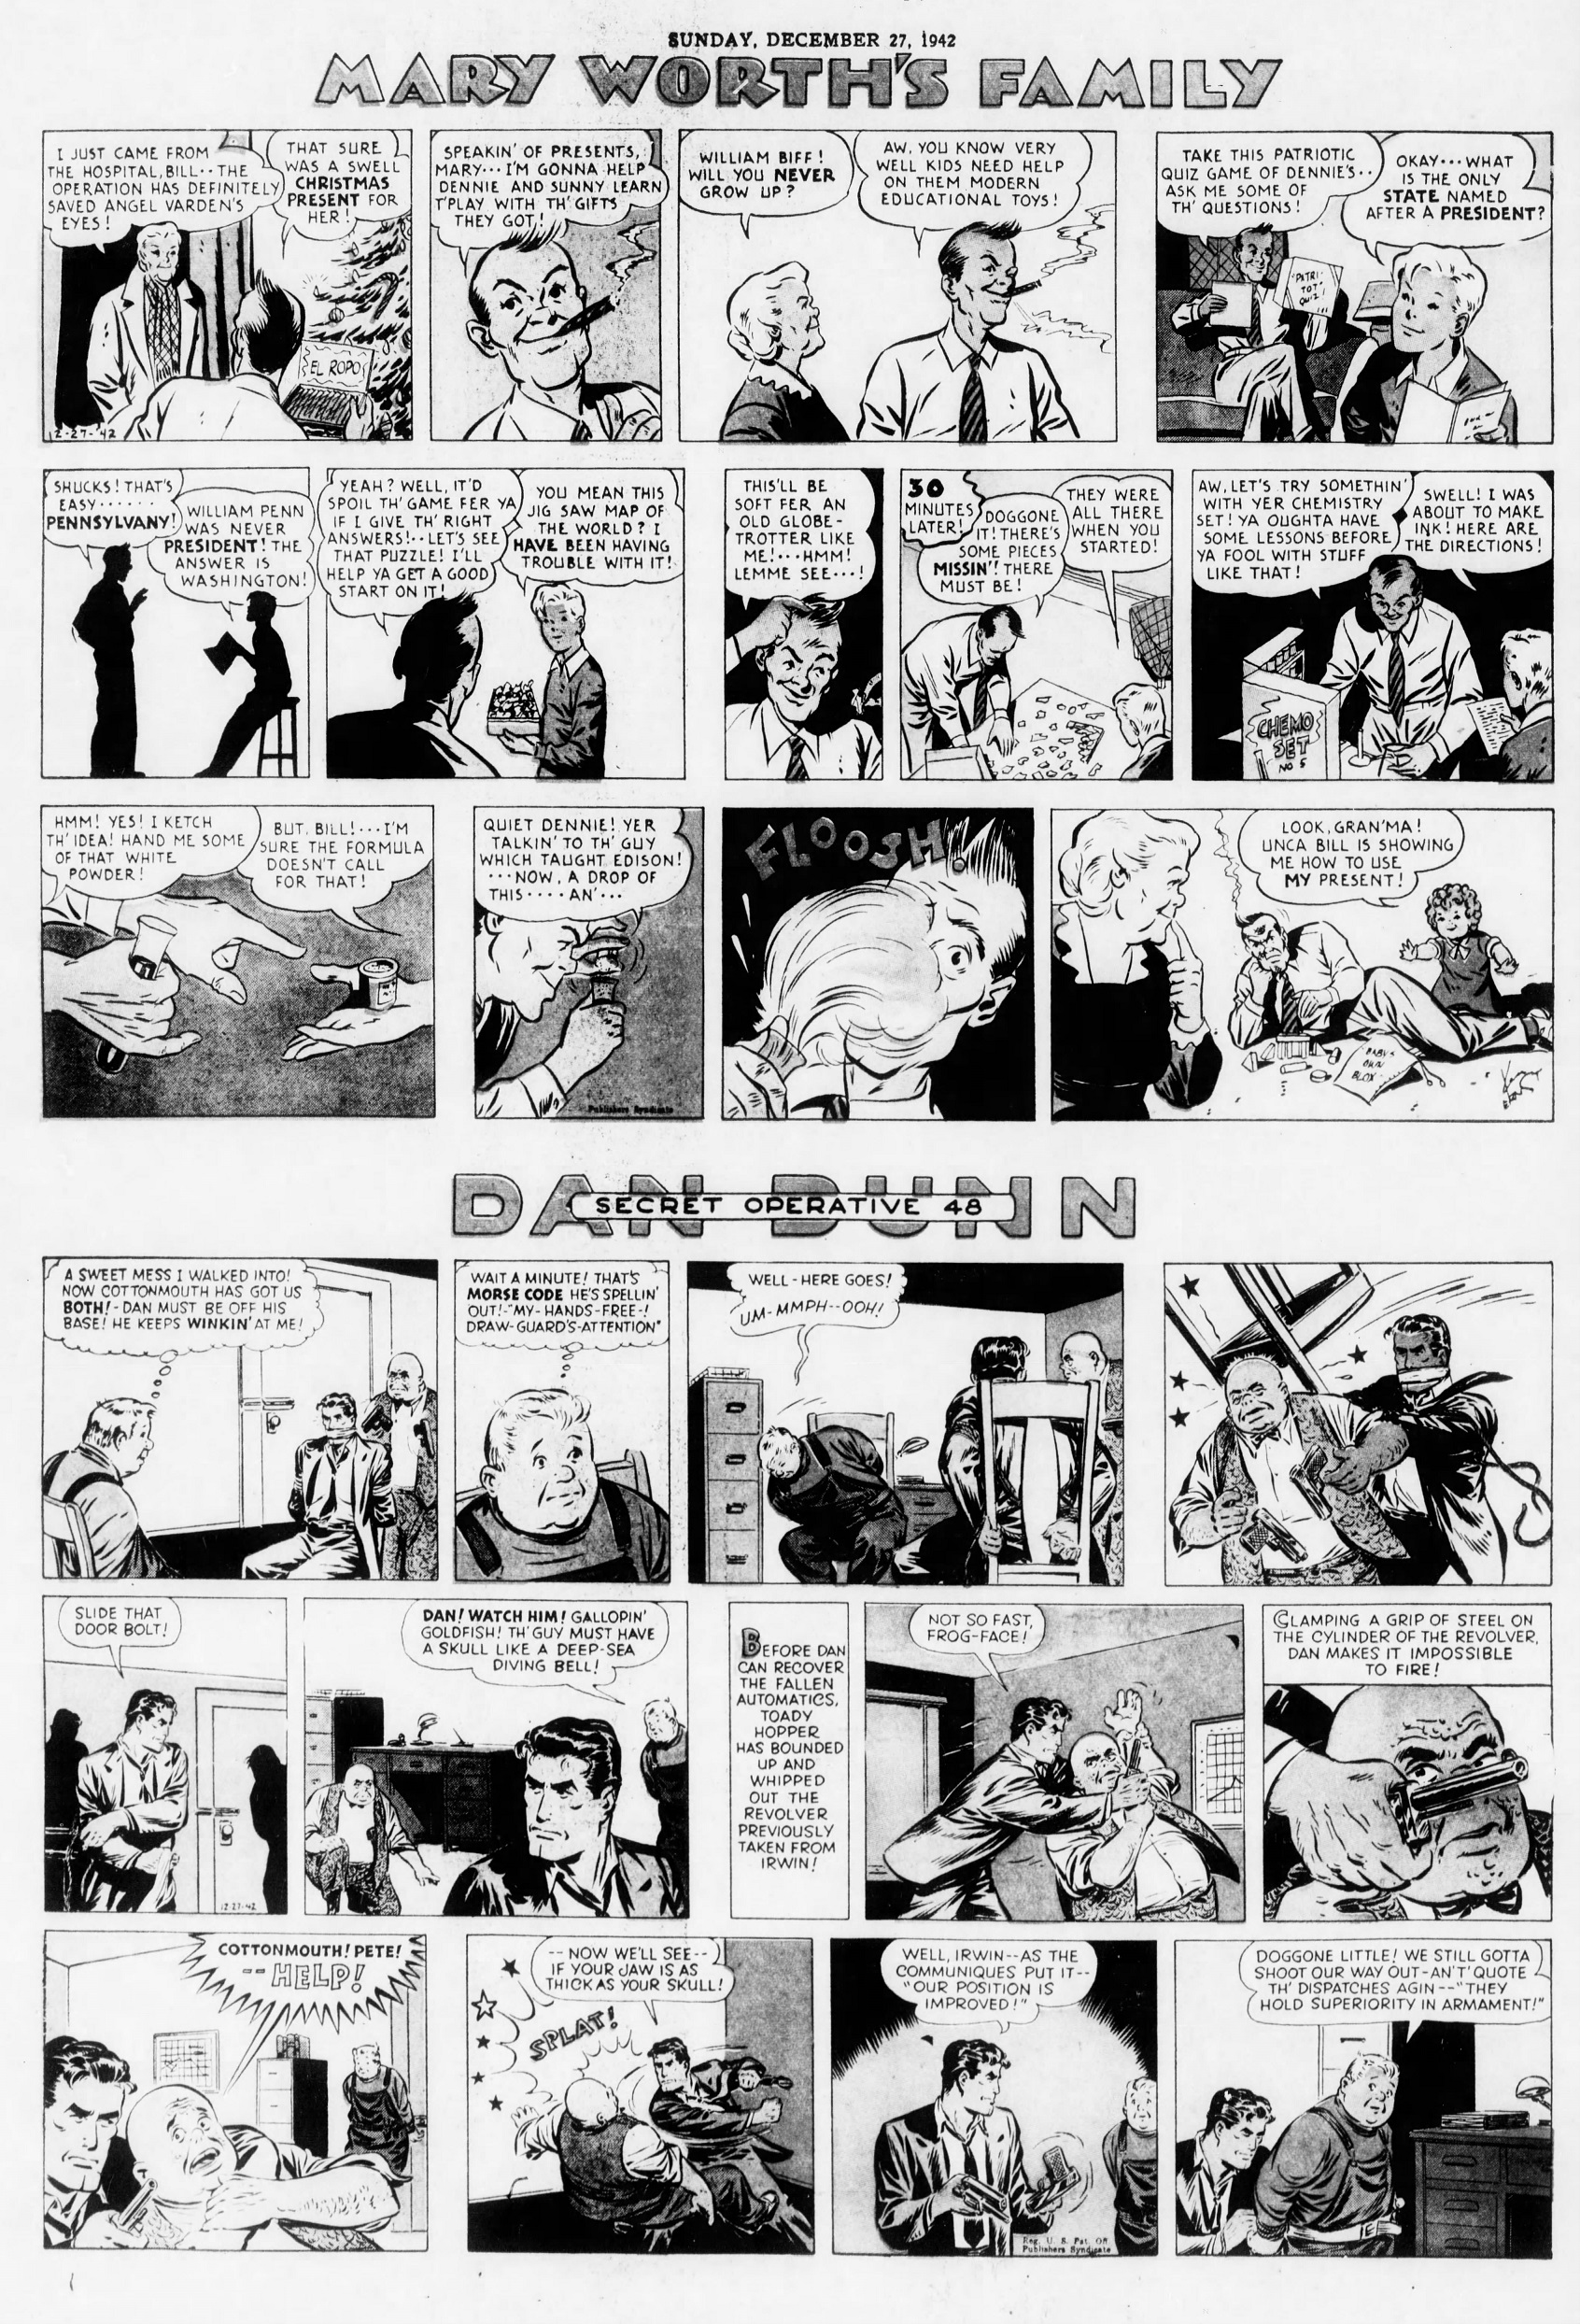 The_Brooklyn_Daily_Eagle_Sun__Dec_27__1942_(10).jpg